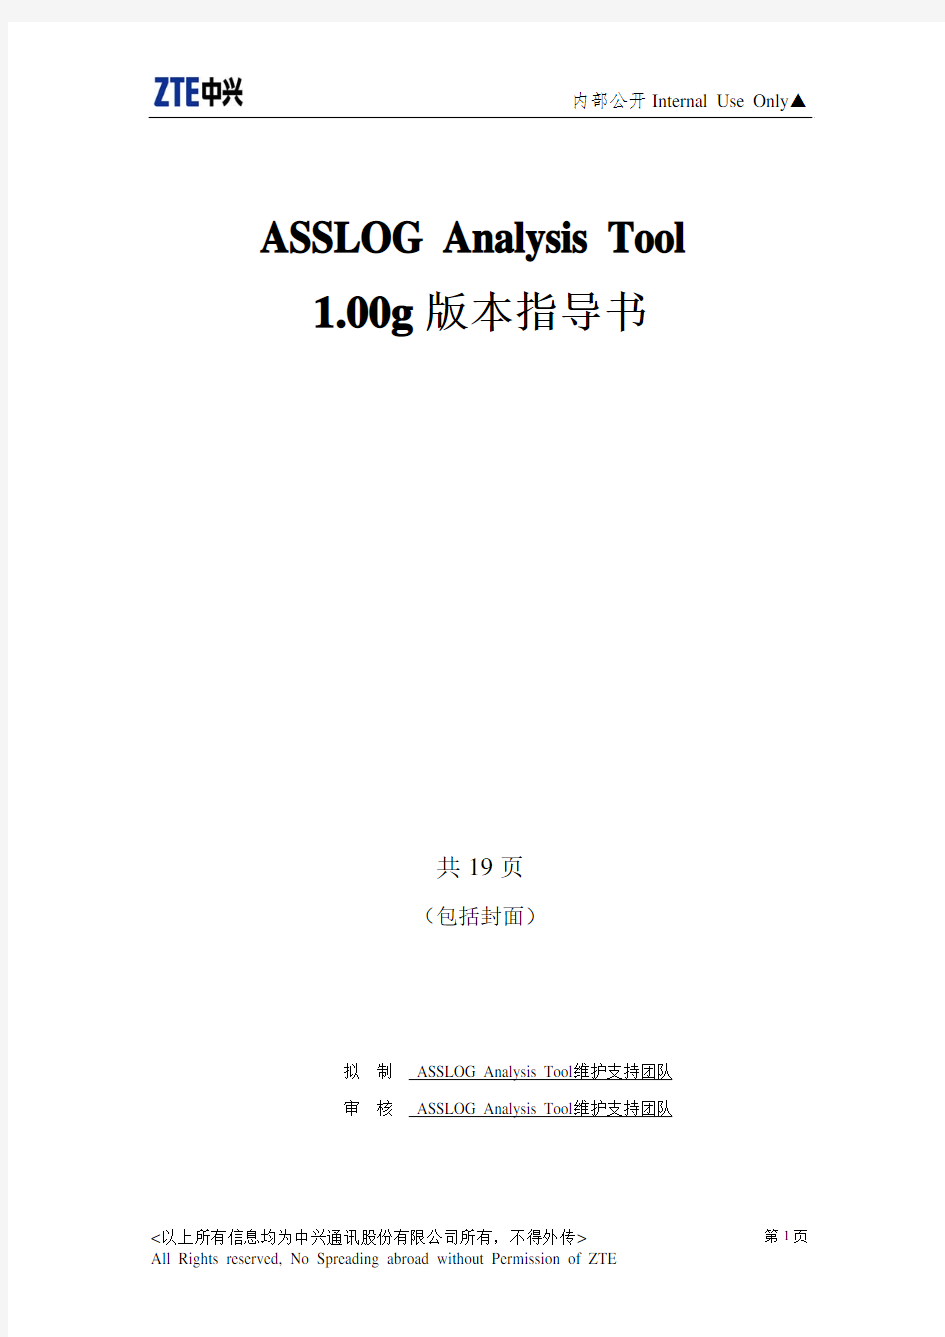 ASSLOGAnalysisTool关联日志分析工具v1[1].00g版本使用指导书